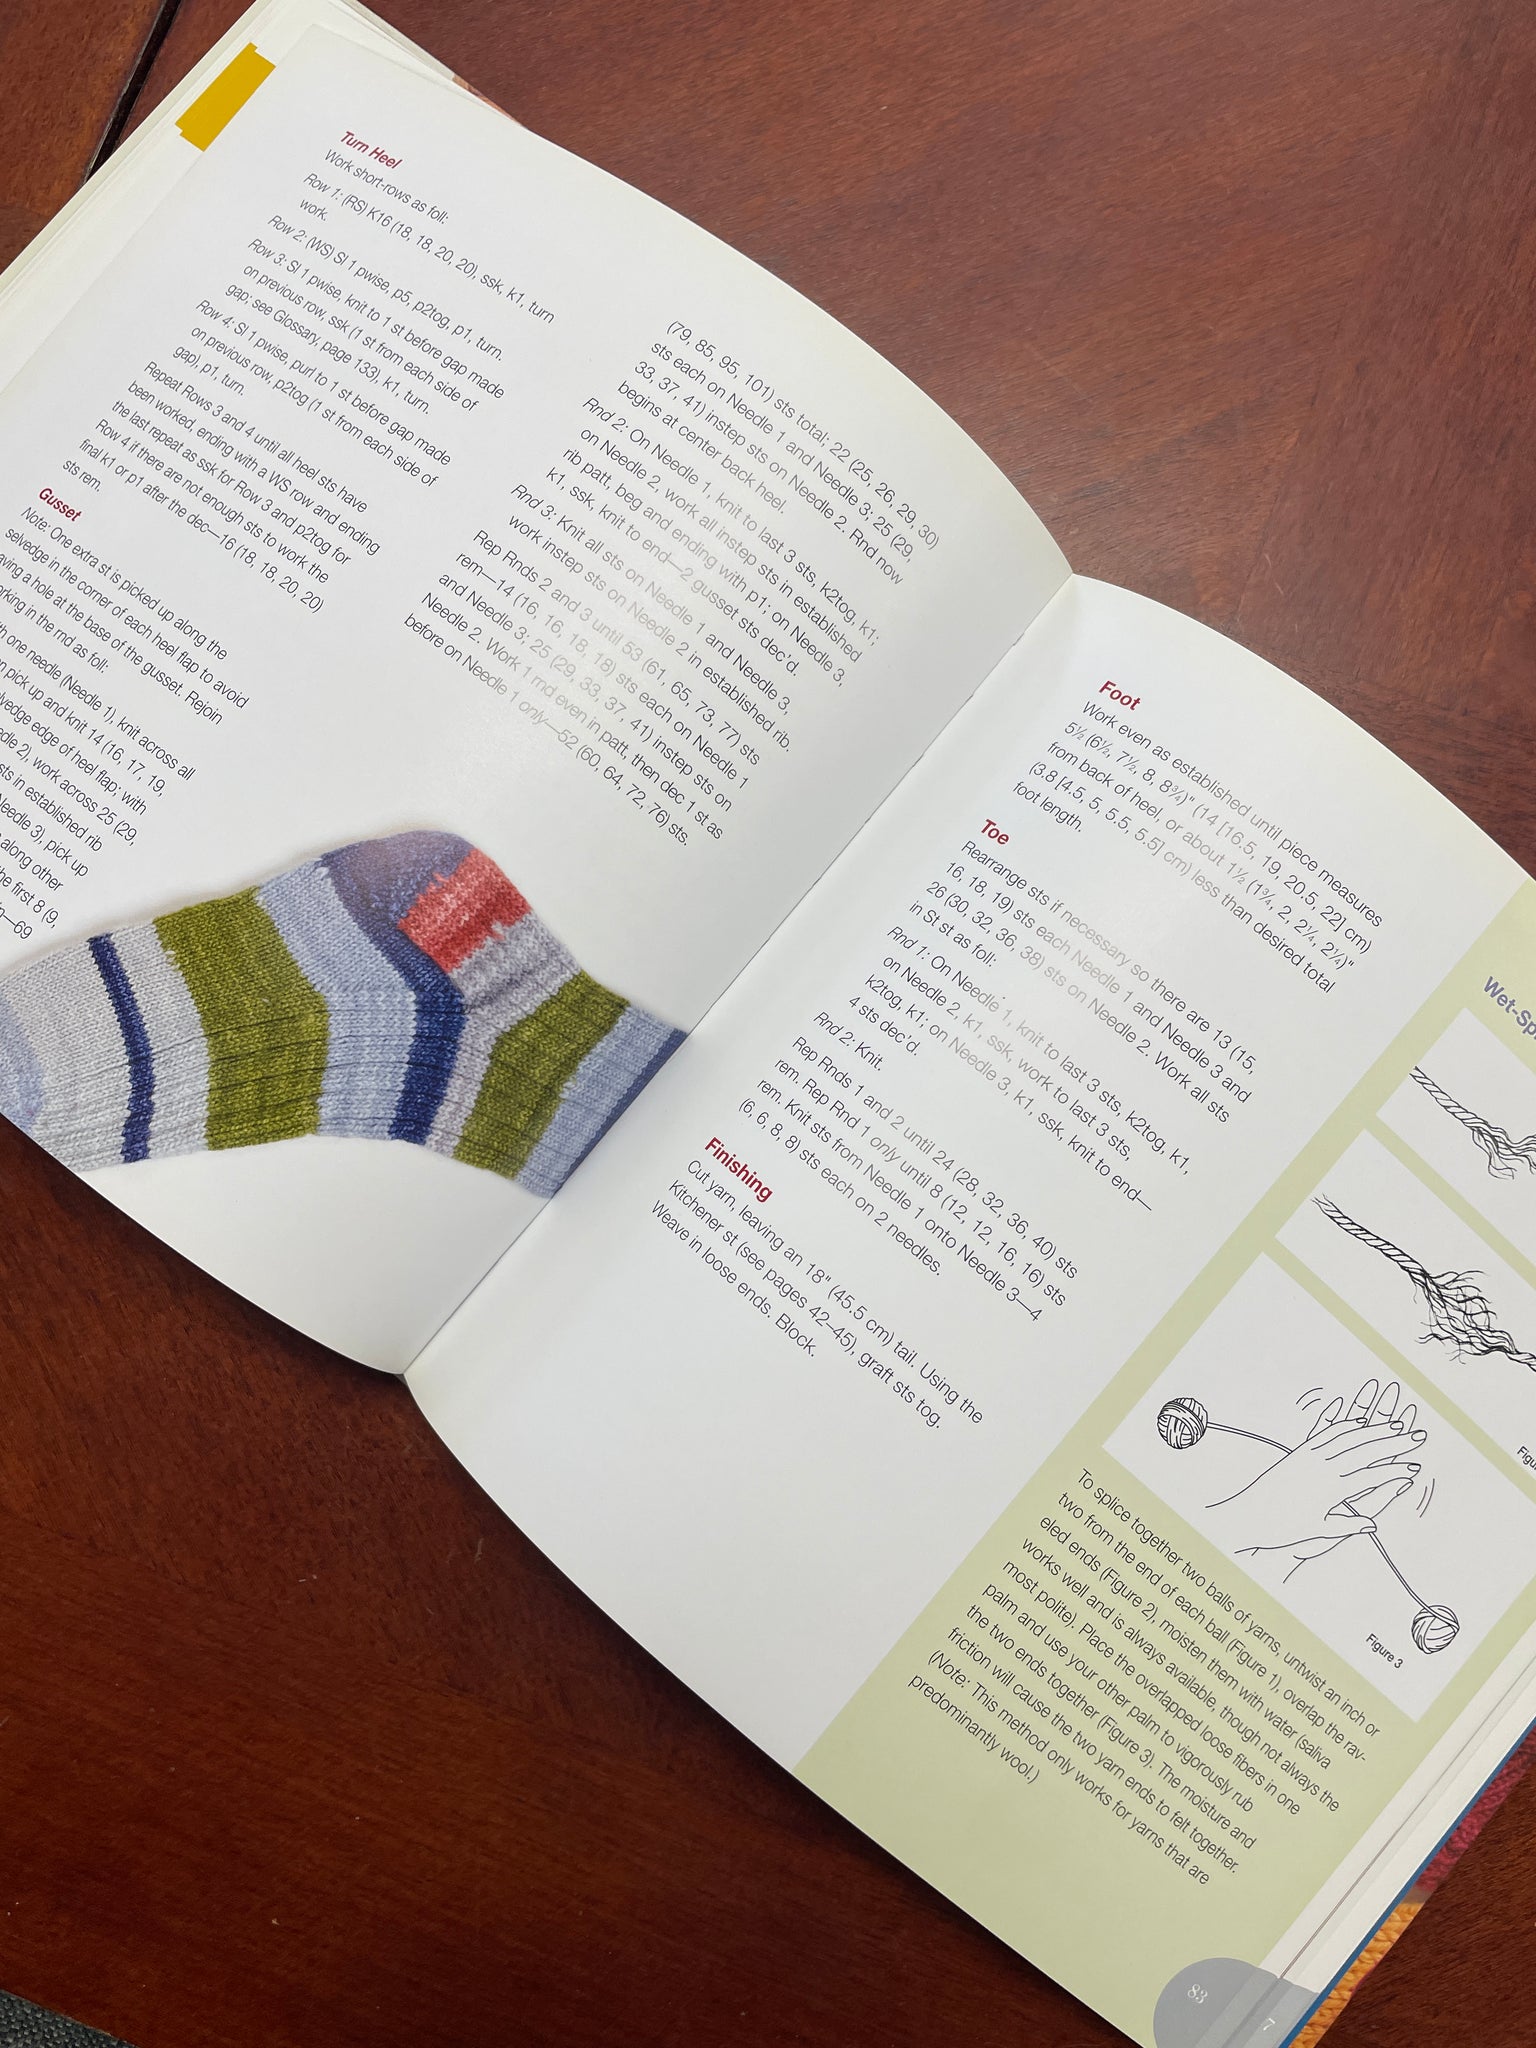 2007 Knitting Book - "Getting Started Knitting Socks"